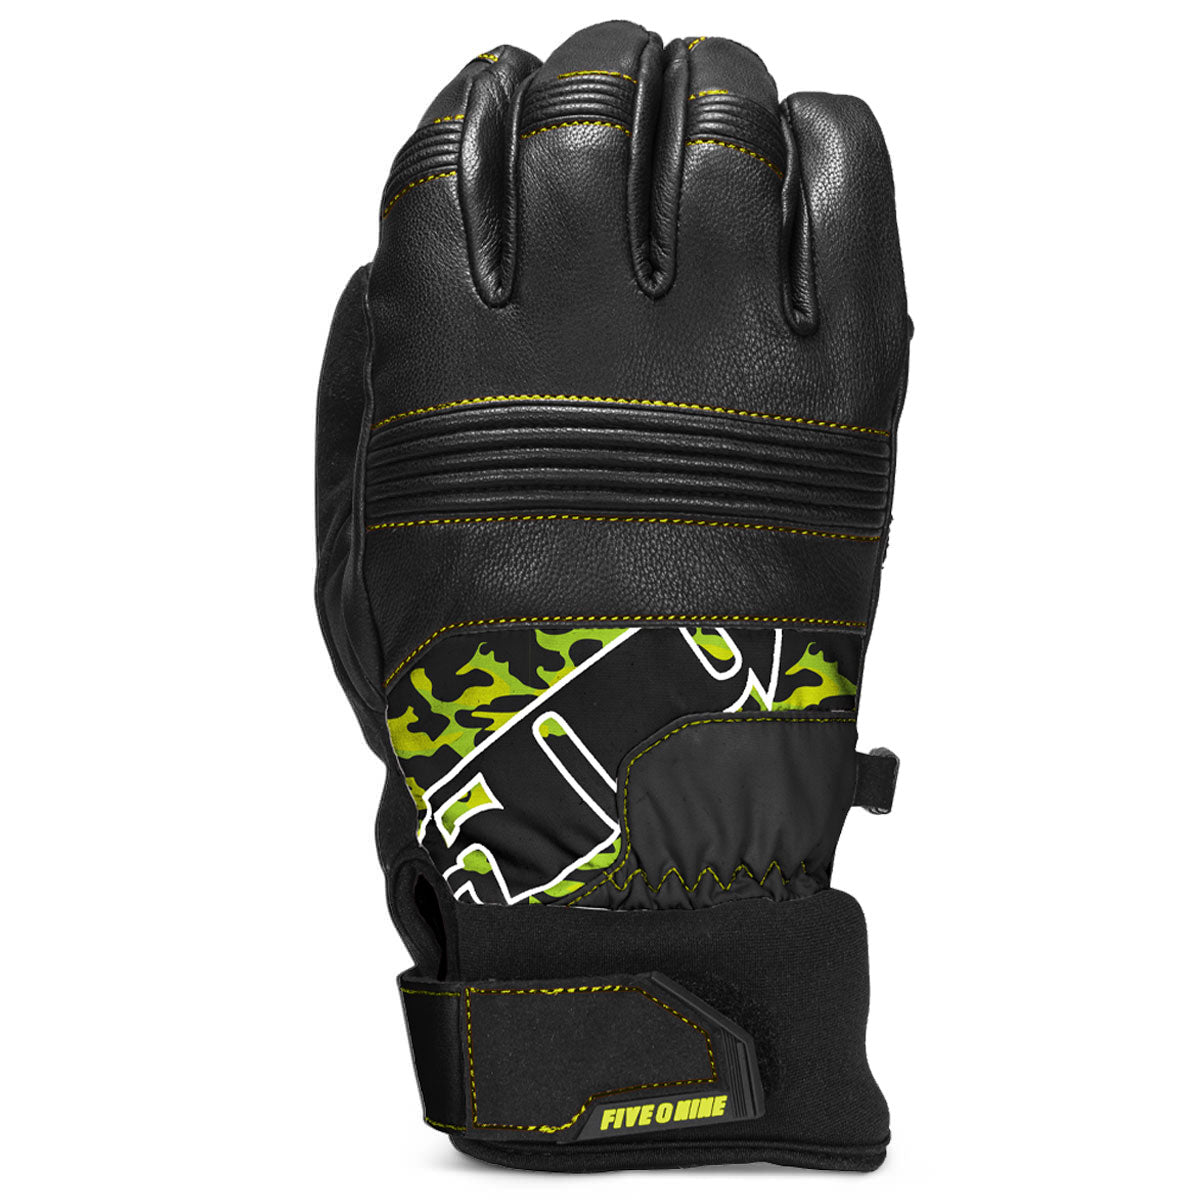 Free Range Gloves - Covert Camo / XS